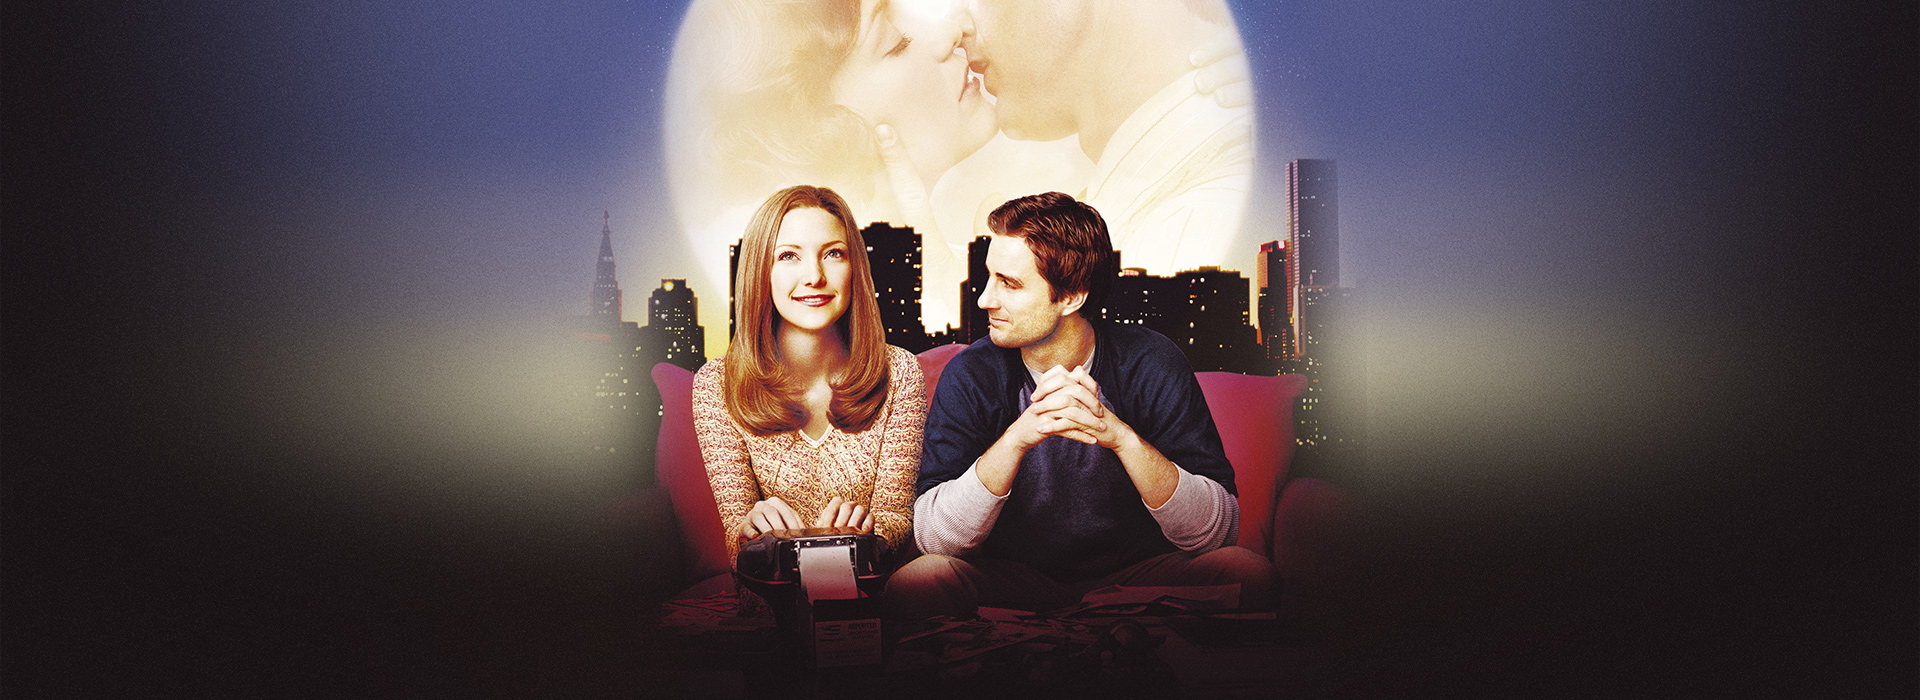 Movie poster Alex & Emma